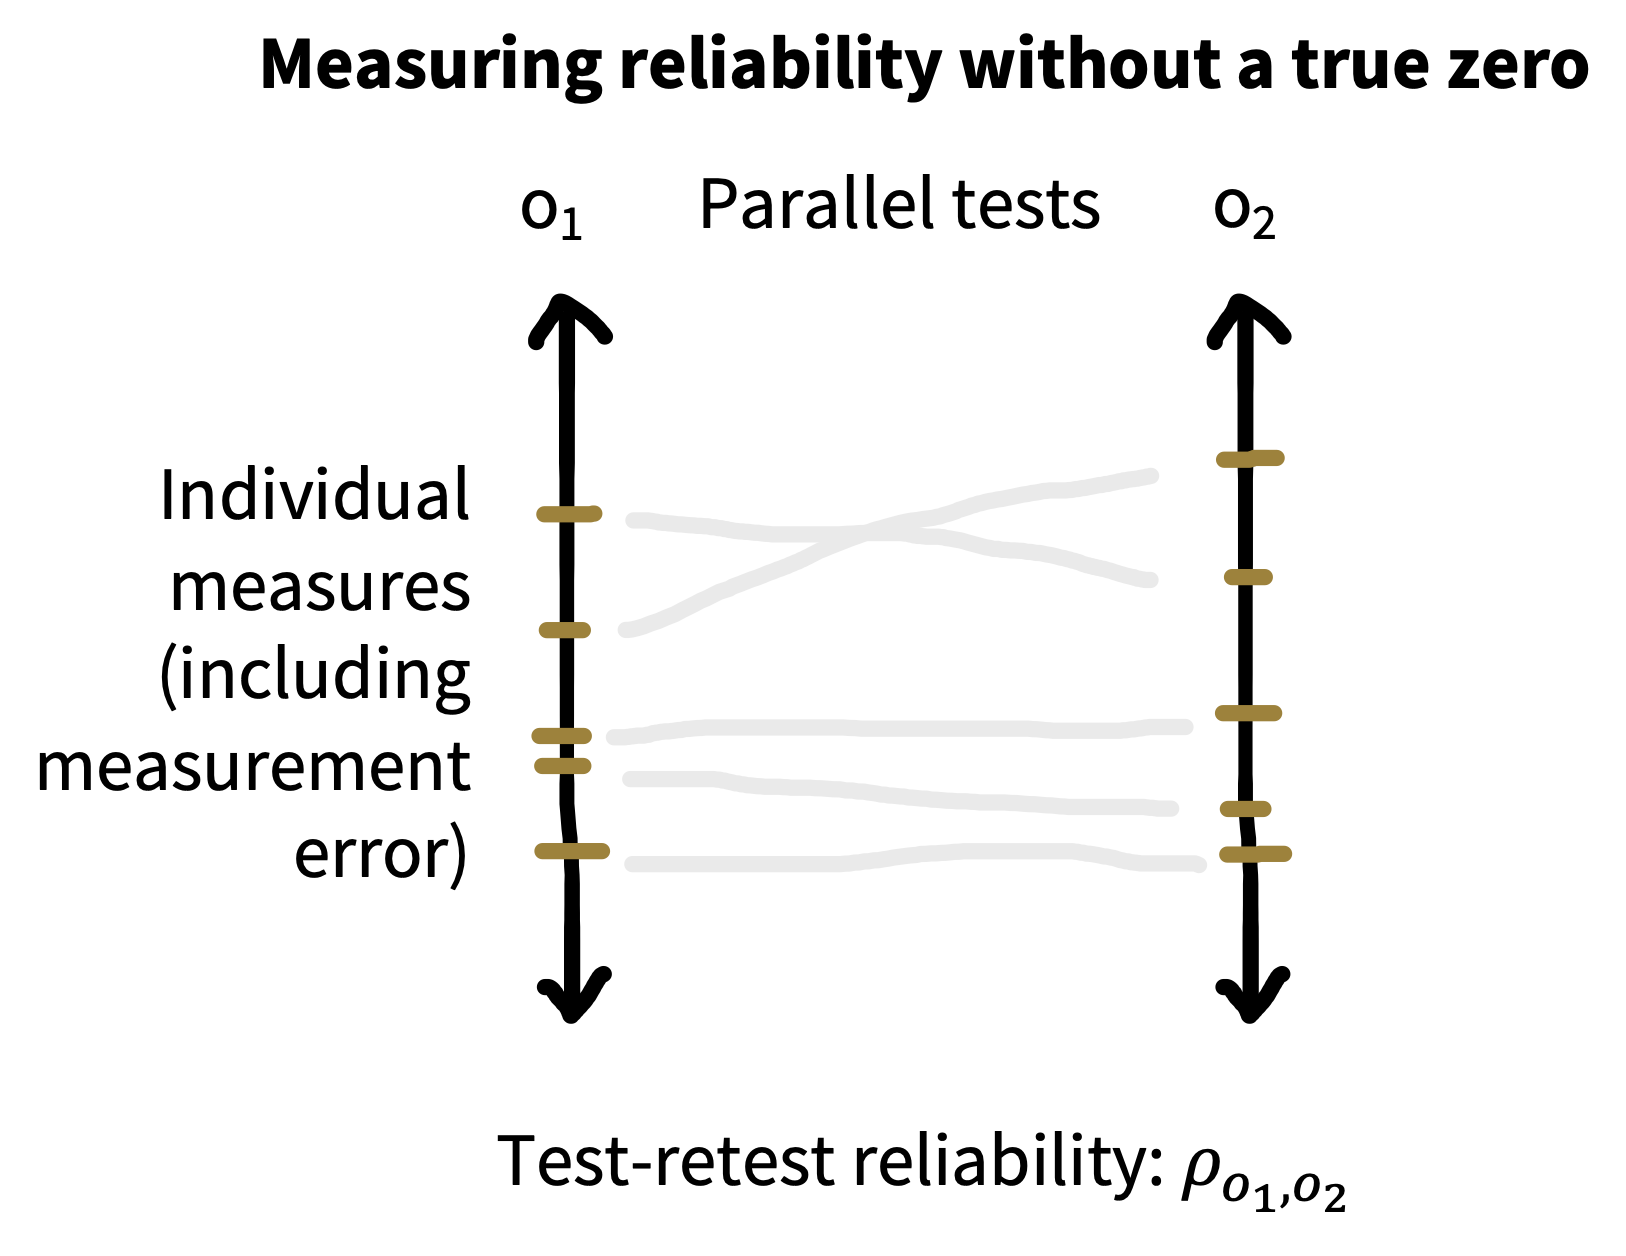 Computing test-retest reliability.